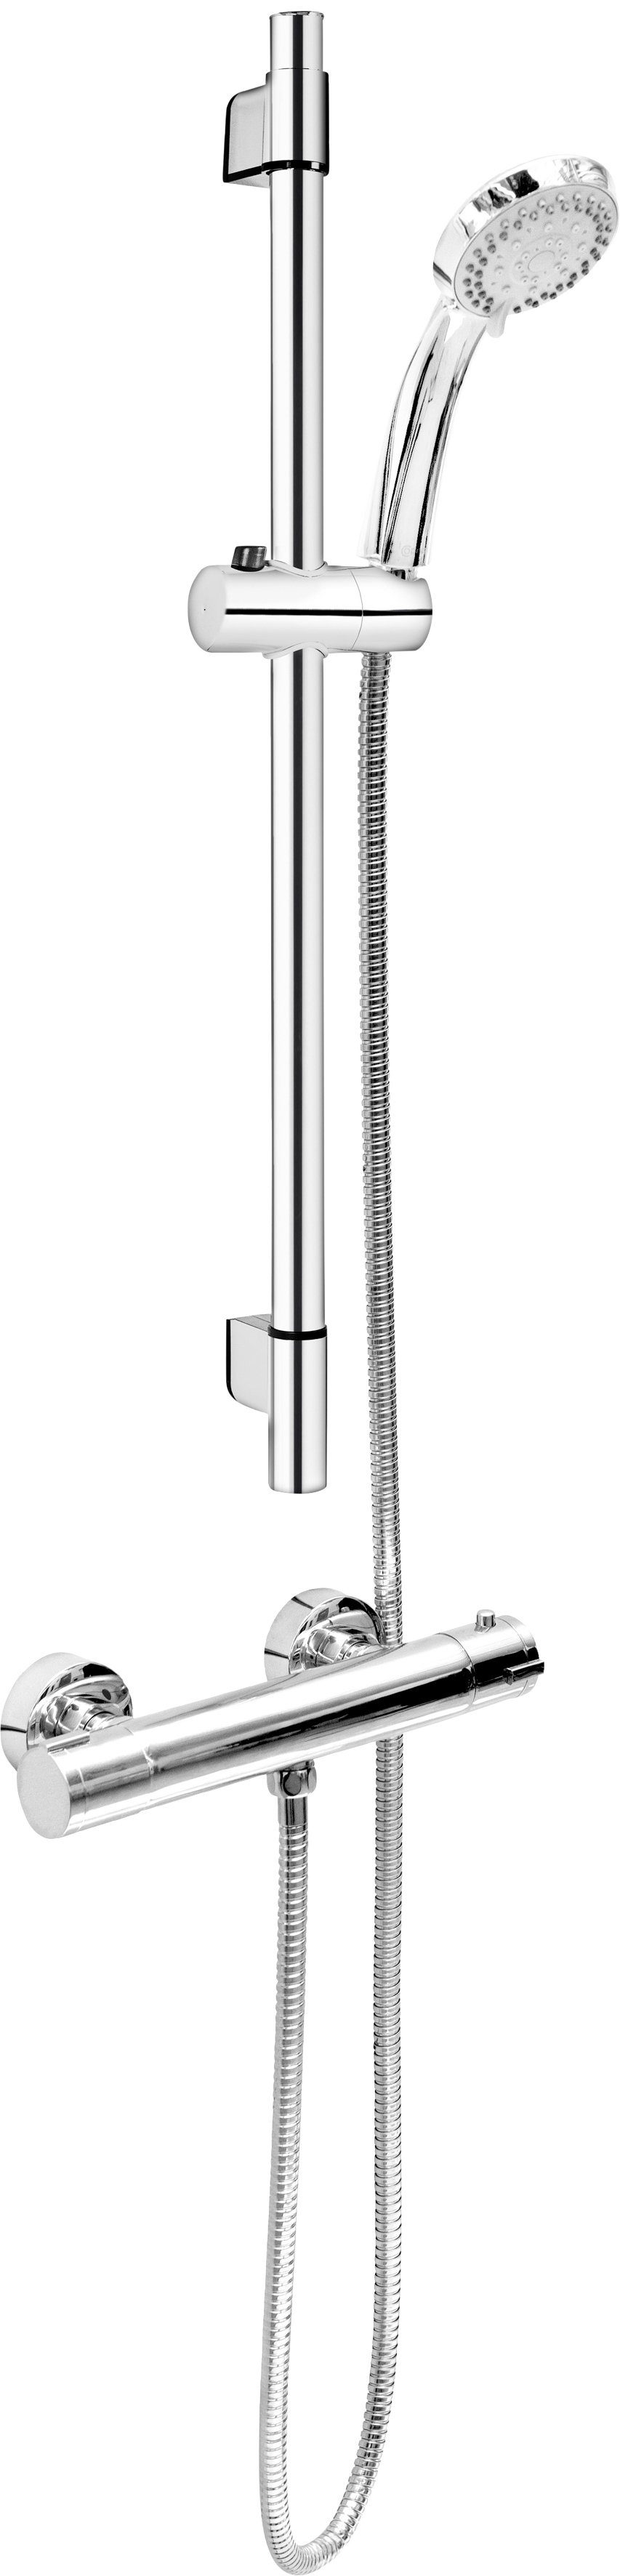 CORNAT Duschsystem FIT Duschsystem mit TH chrom, Höhe 6,7 cm, Set, Antikalk-Noppen